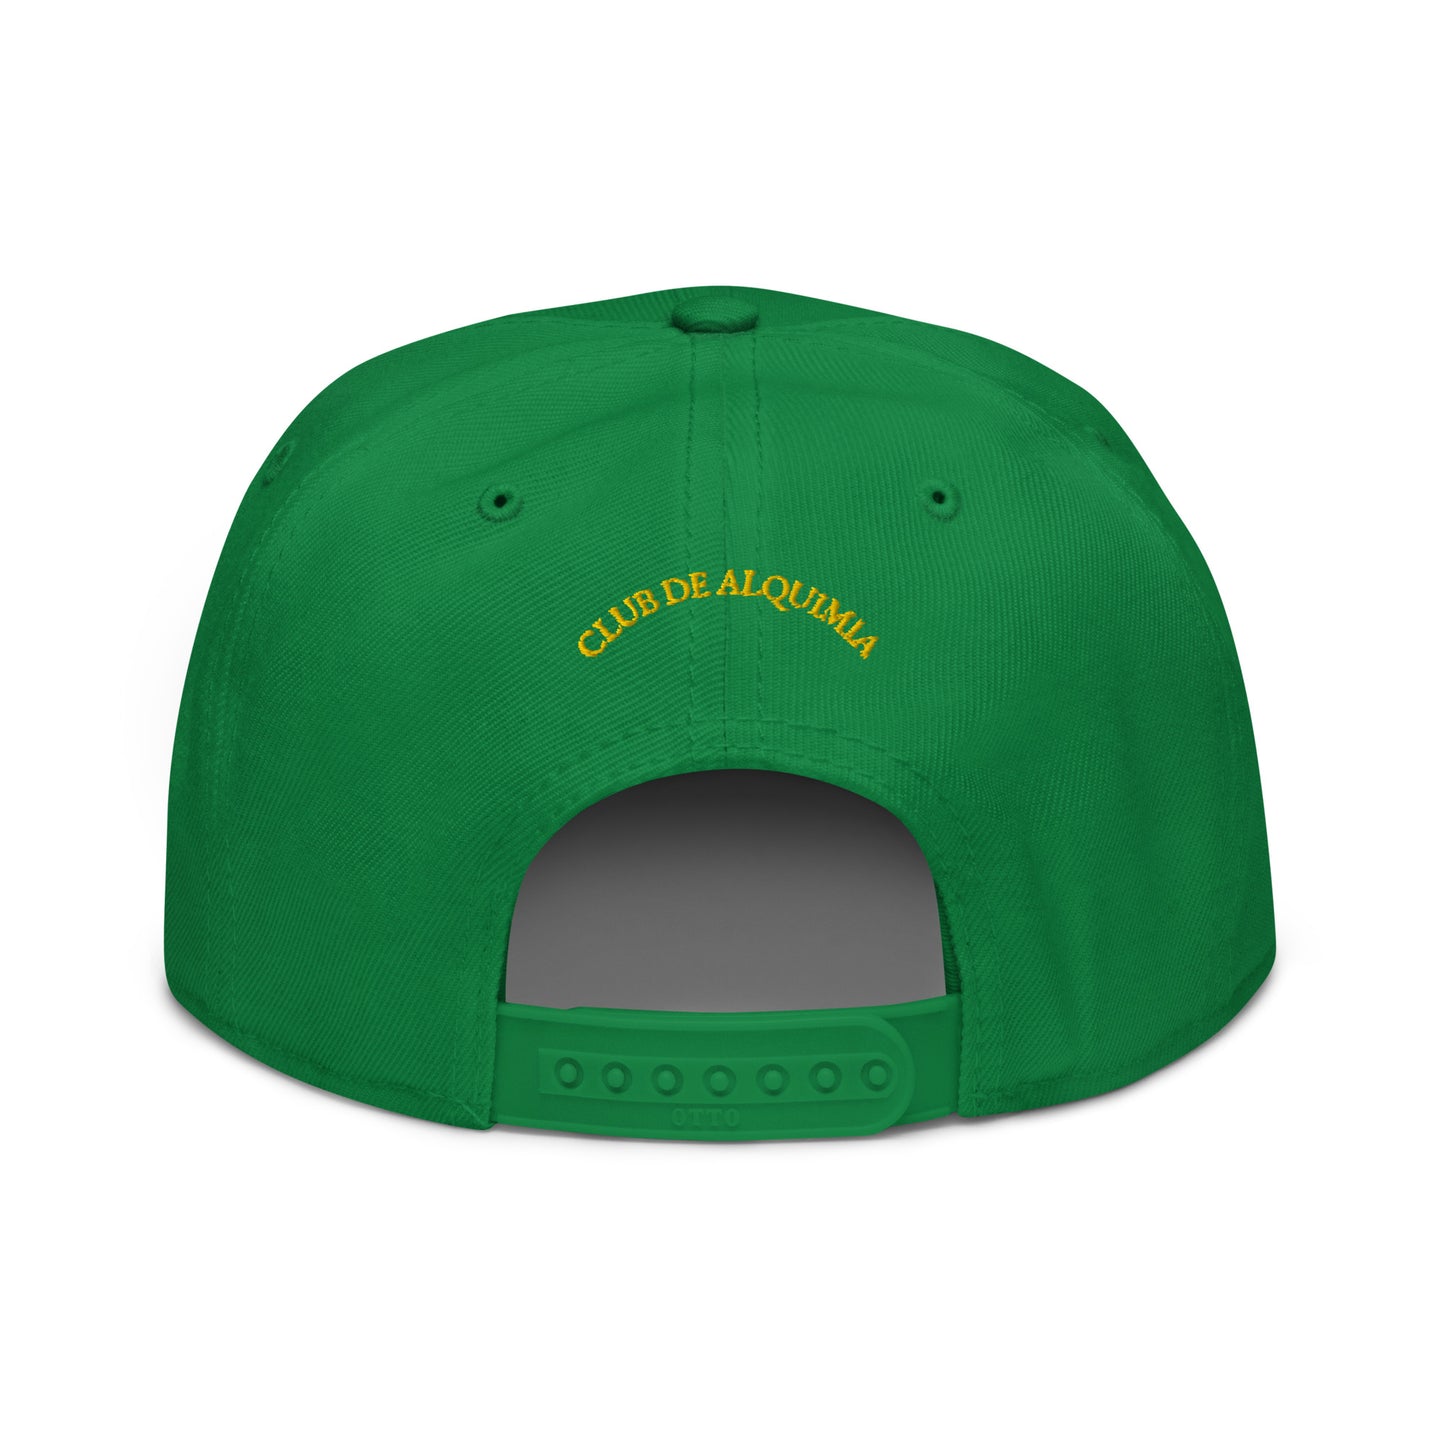 Galeria Atzilut Snapback Hat